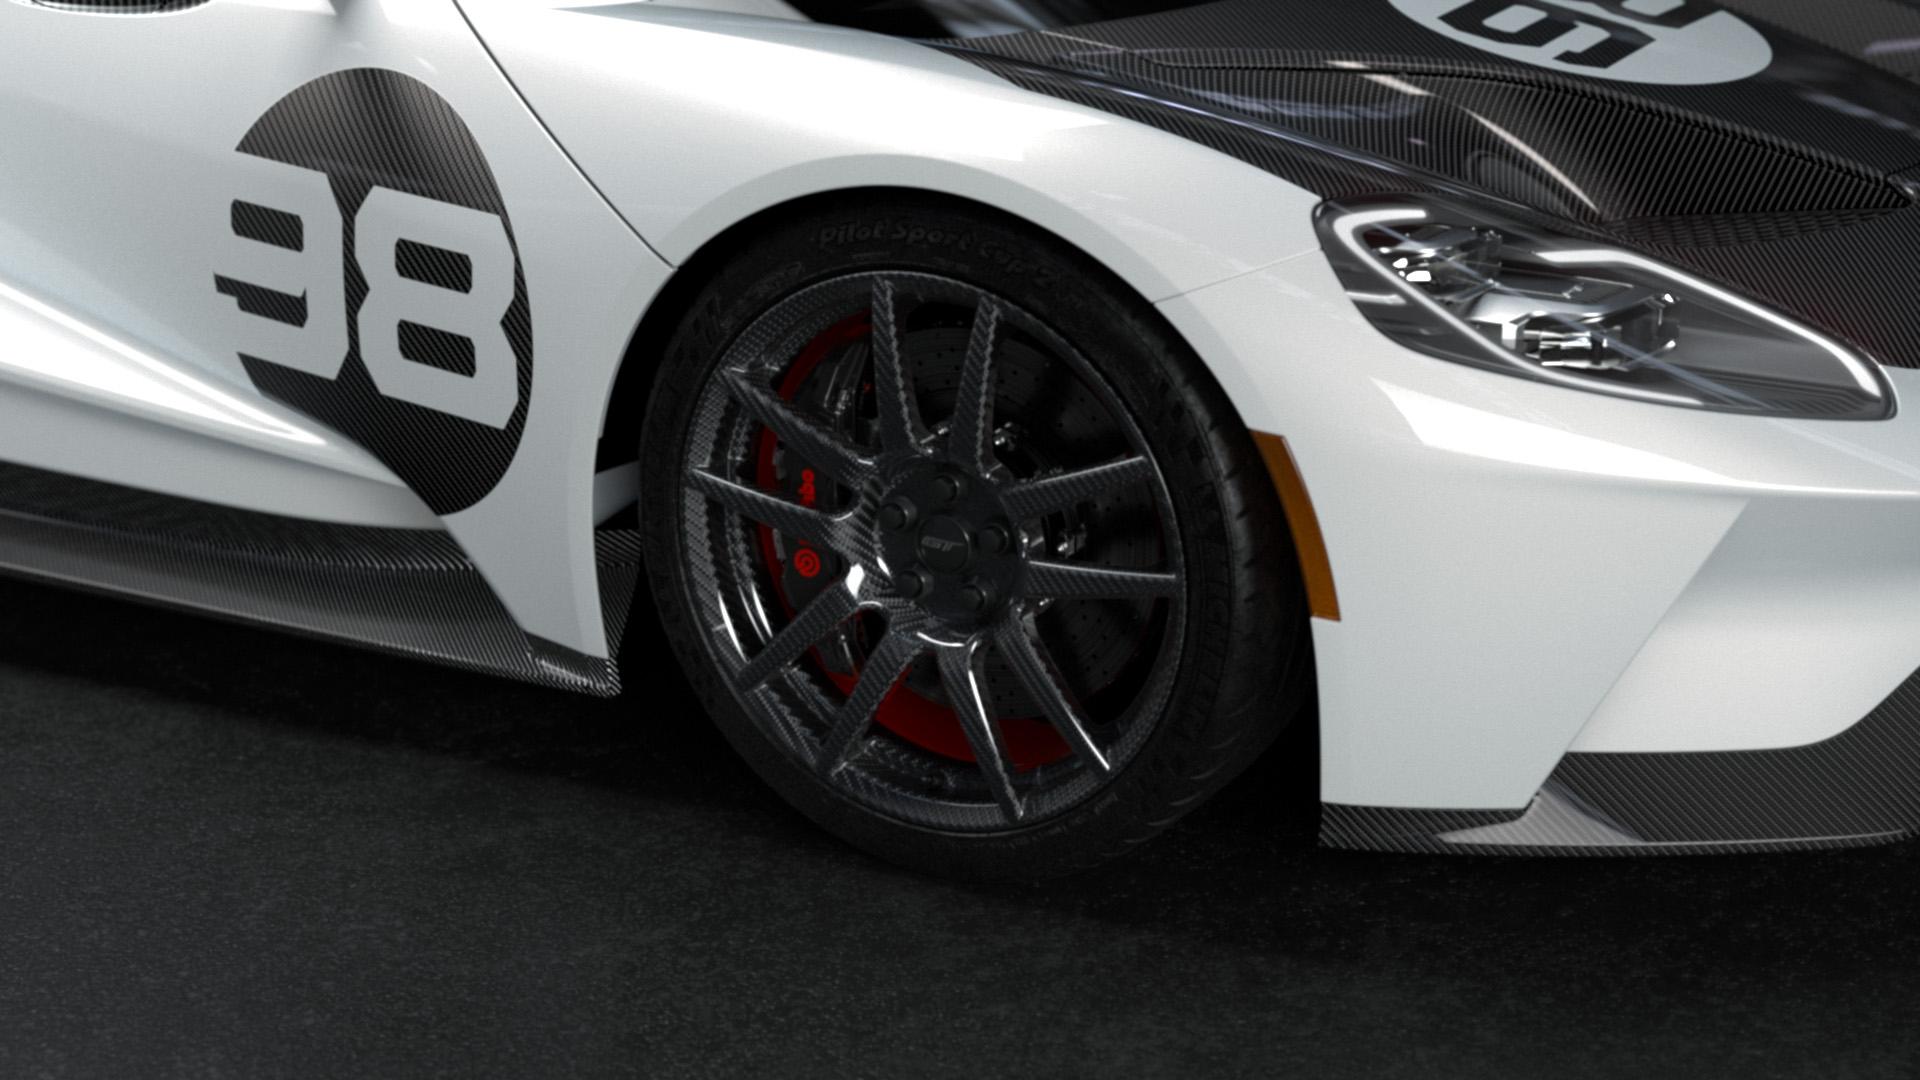 Ford GT Carbon Fiber Wheels